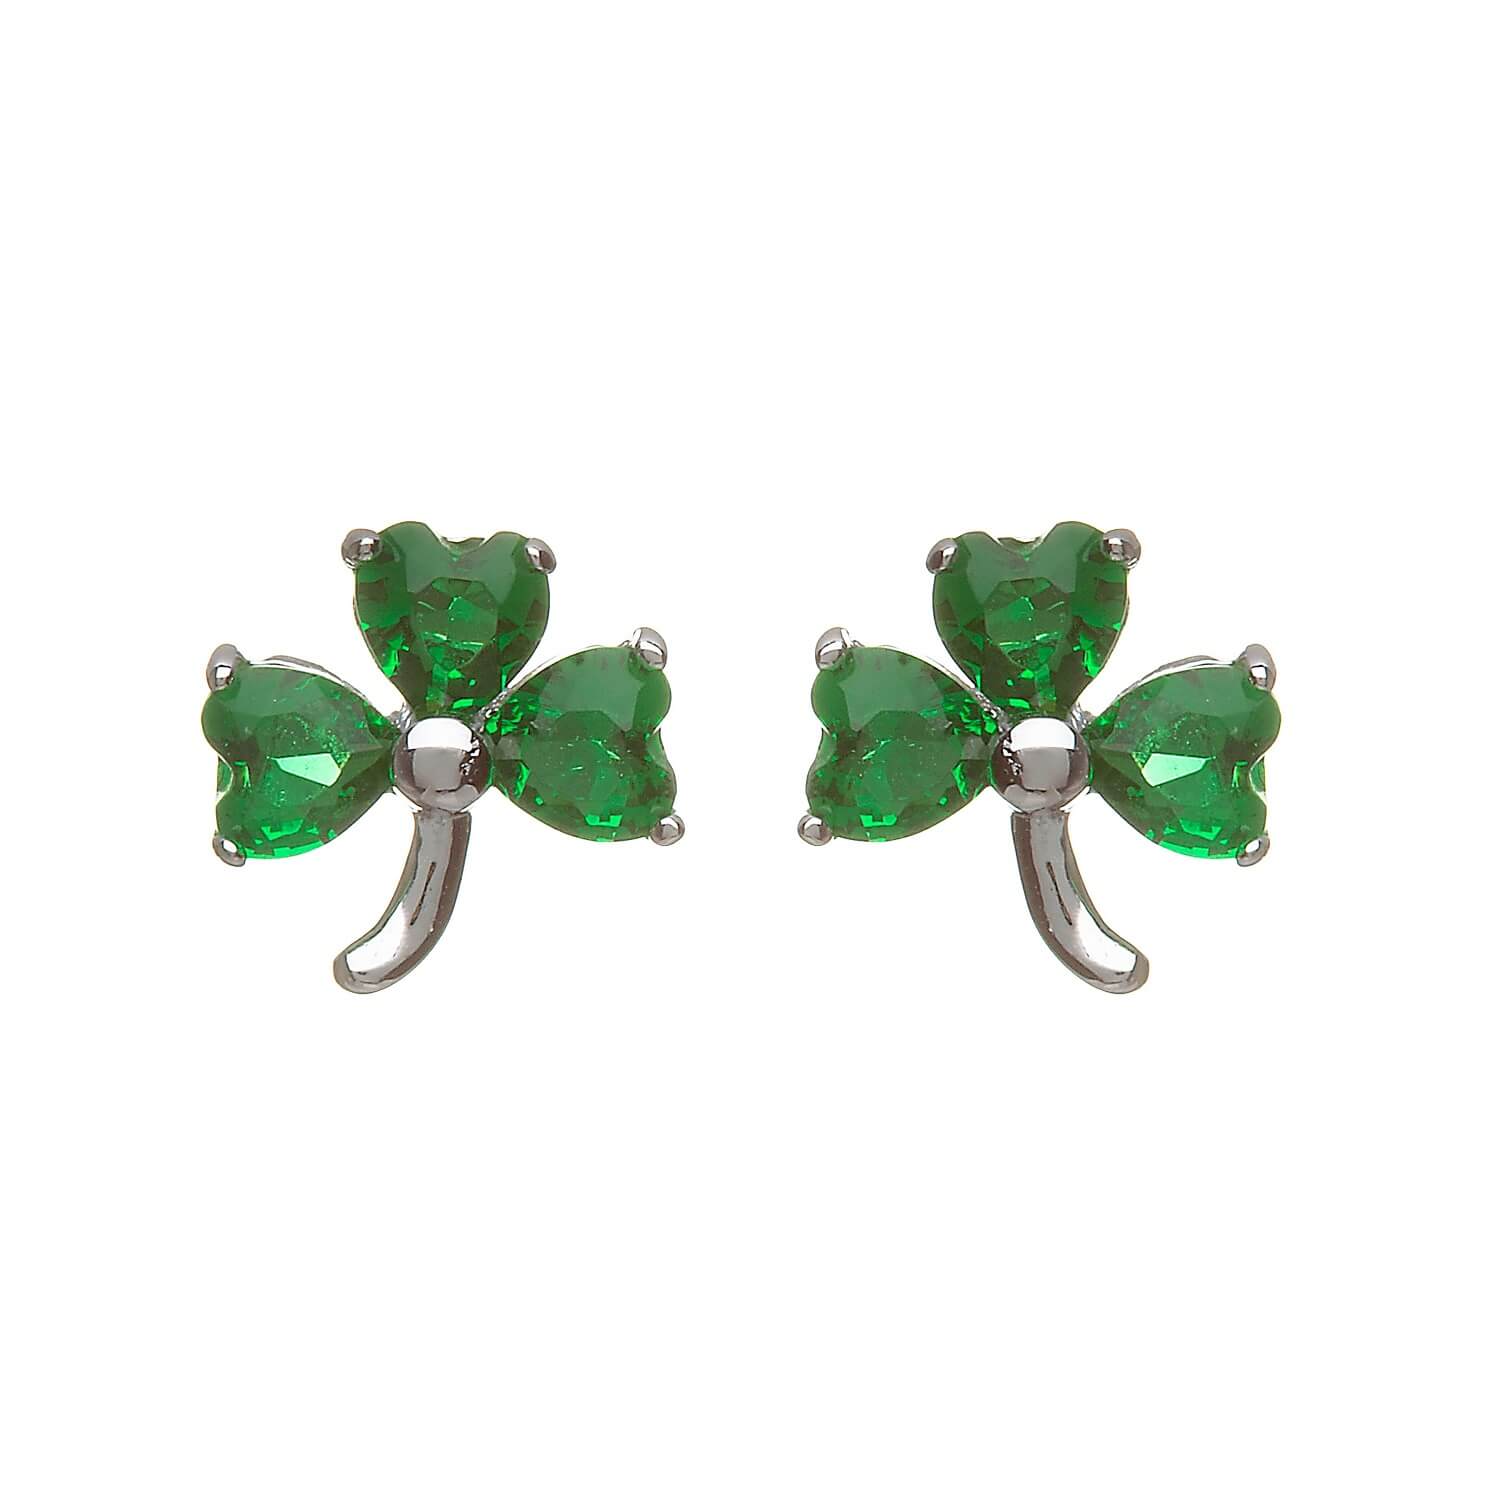 Sterling Silver Shamrock Stud Earrings with Green CZ stones